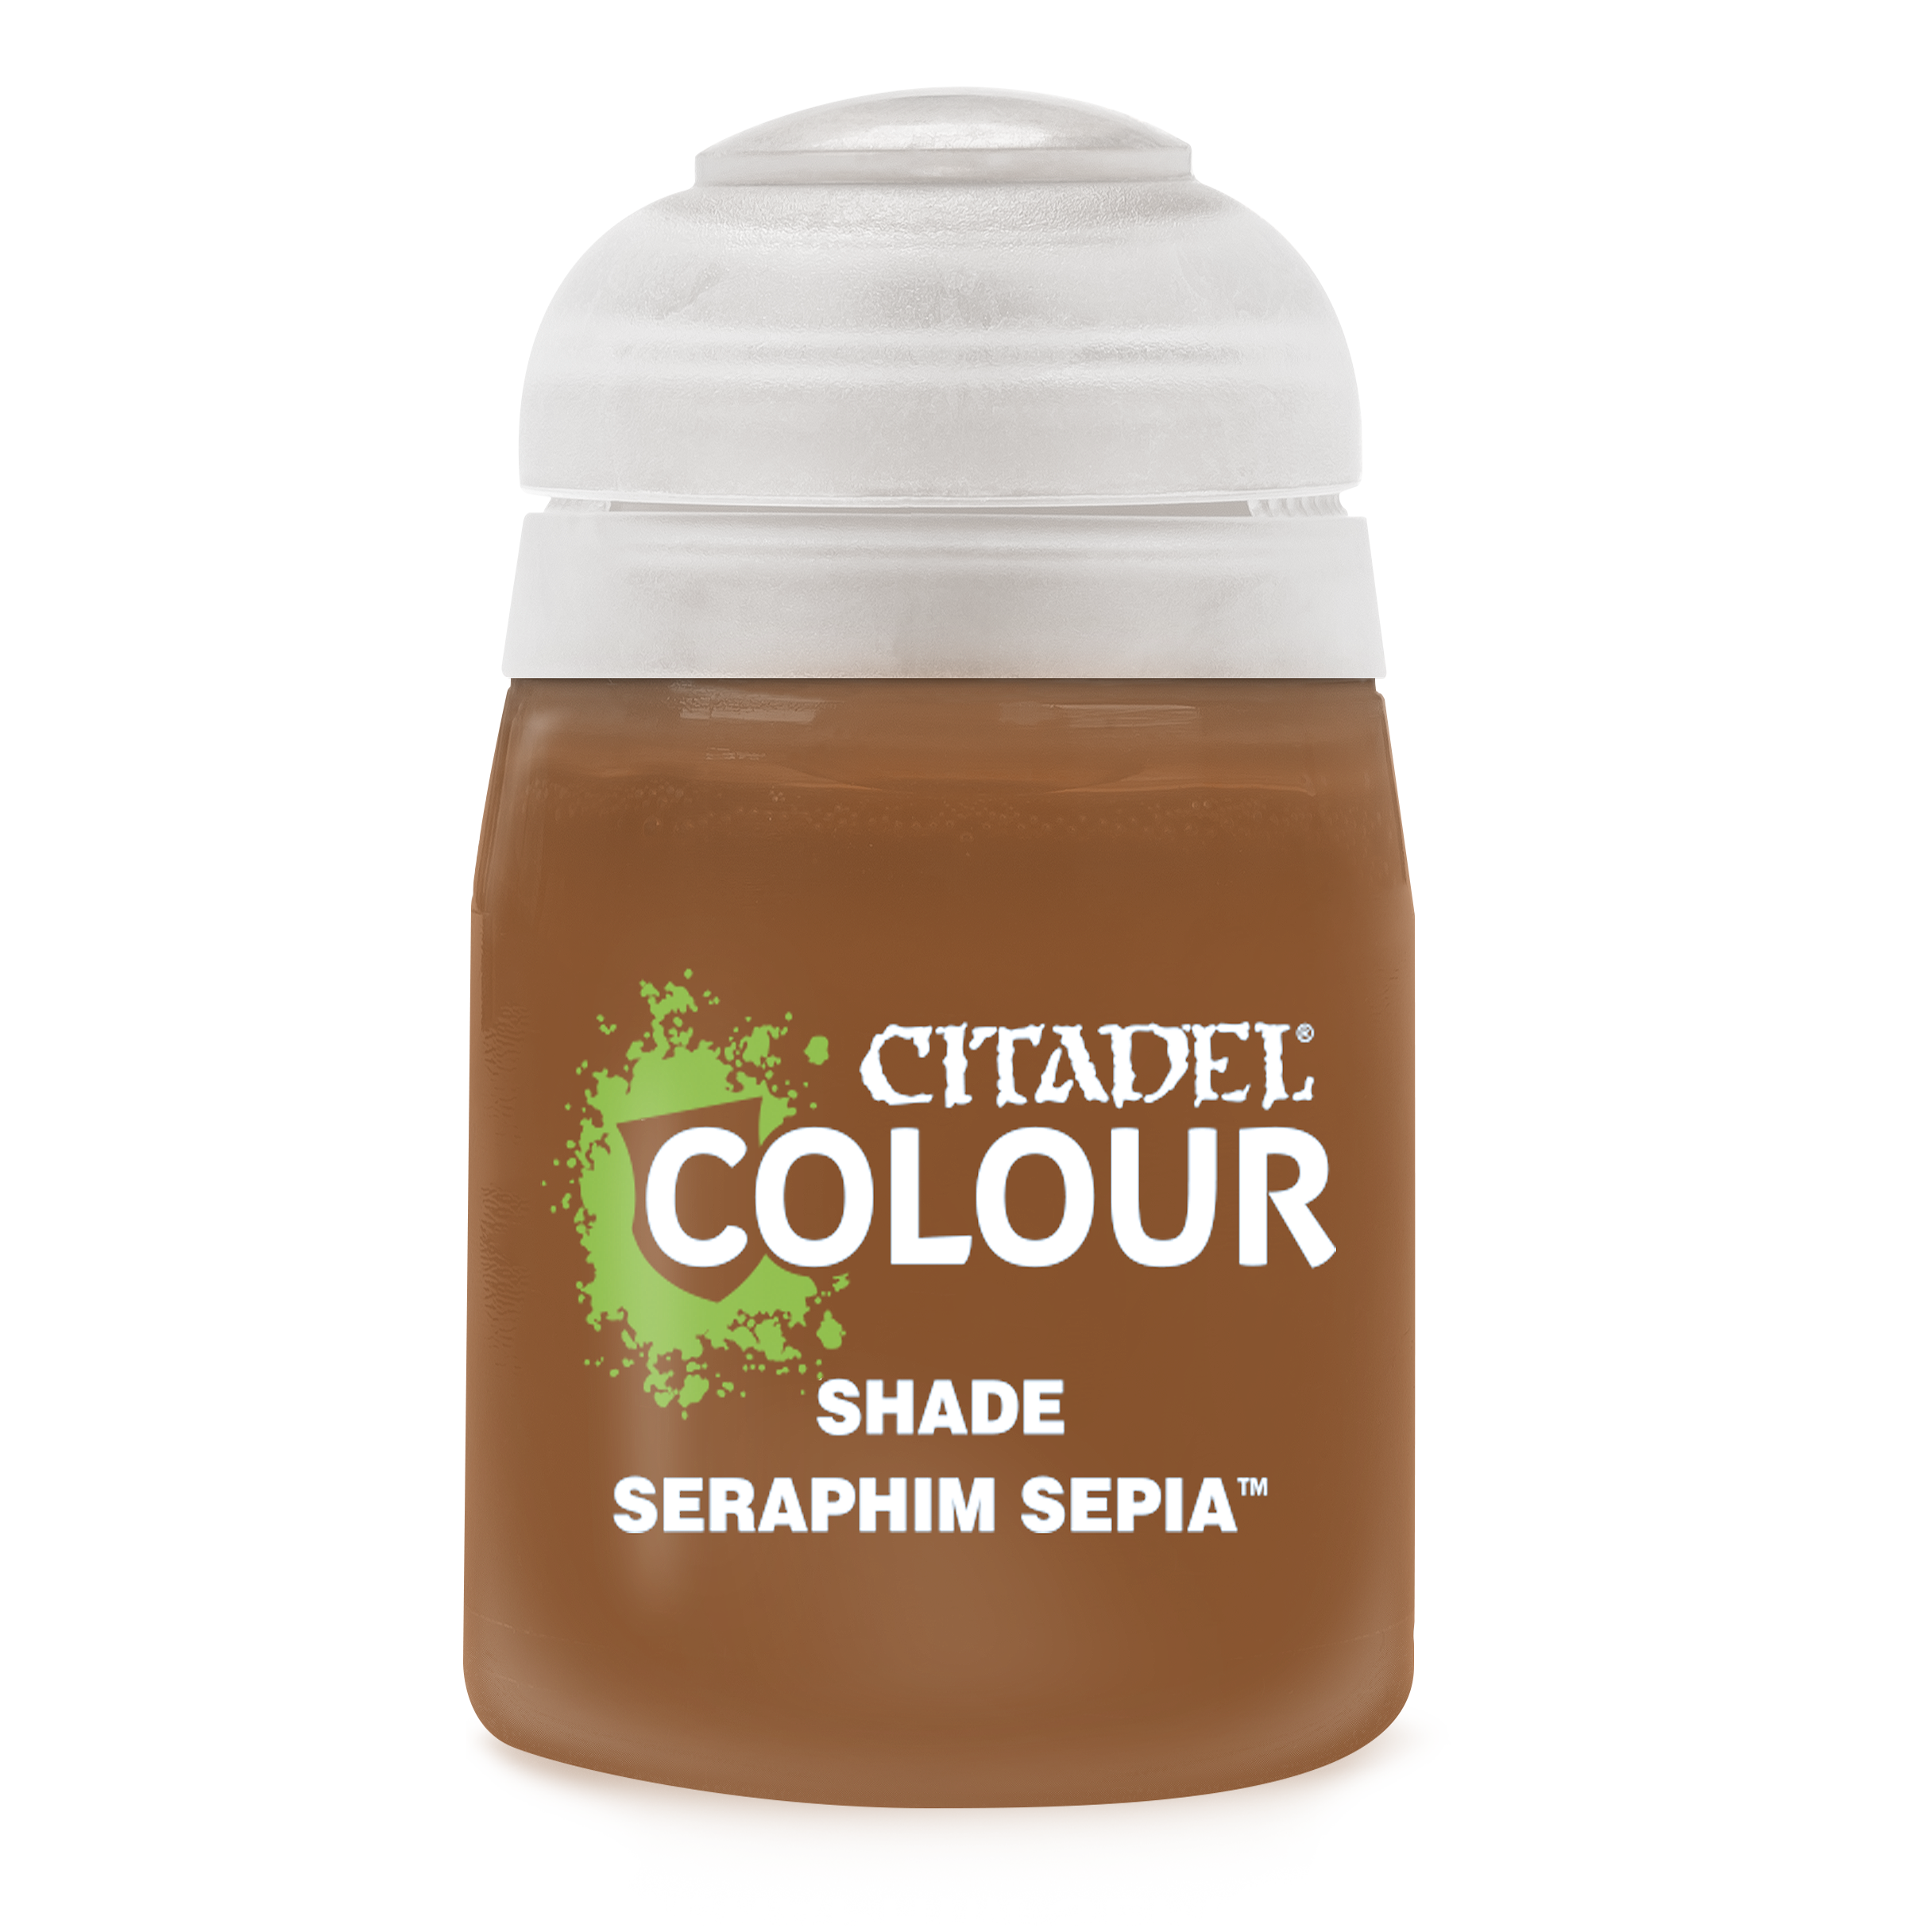 Seraphim Sepia Citadel Shade Paint | Lots Moore NSW